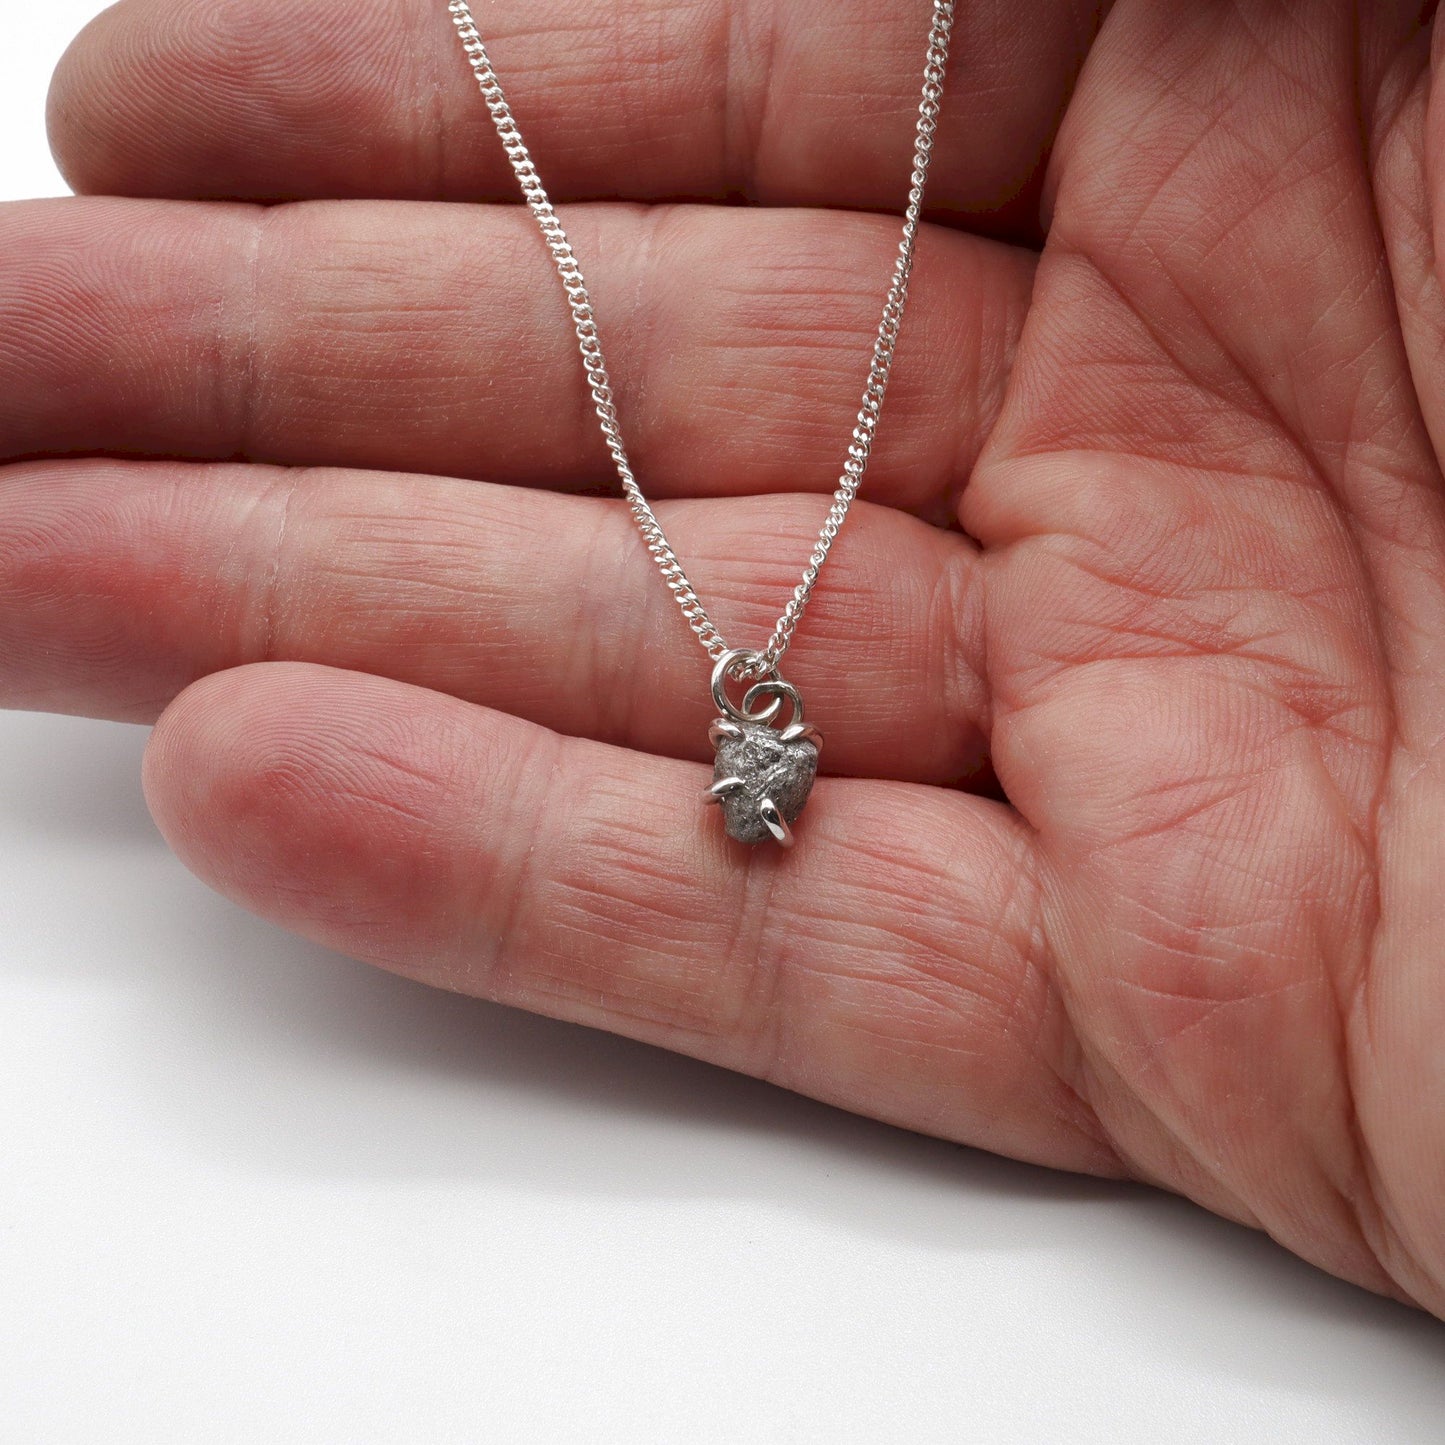 Uncut natural grey diamond handmade pendant